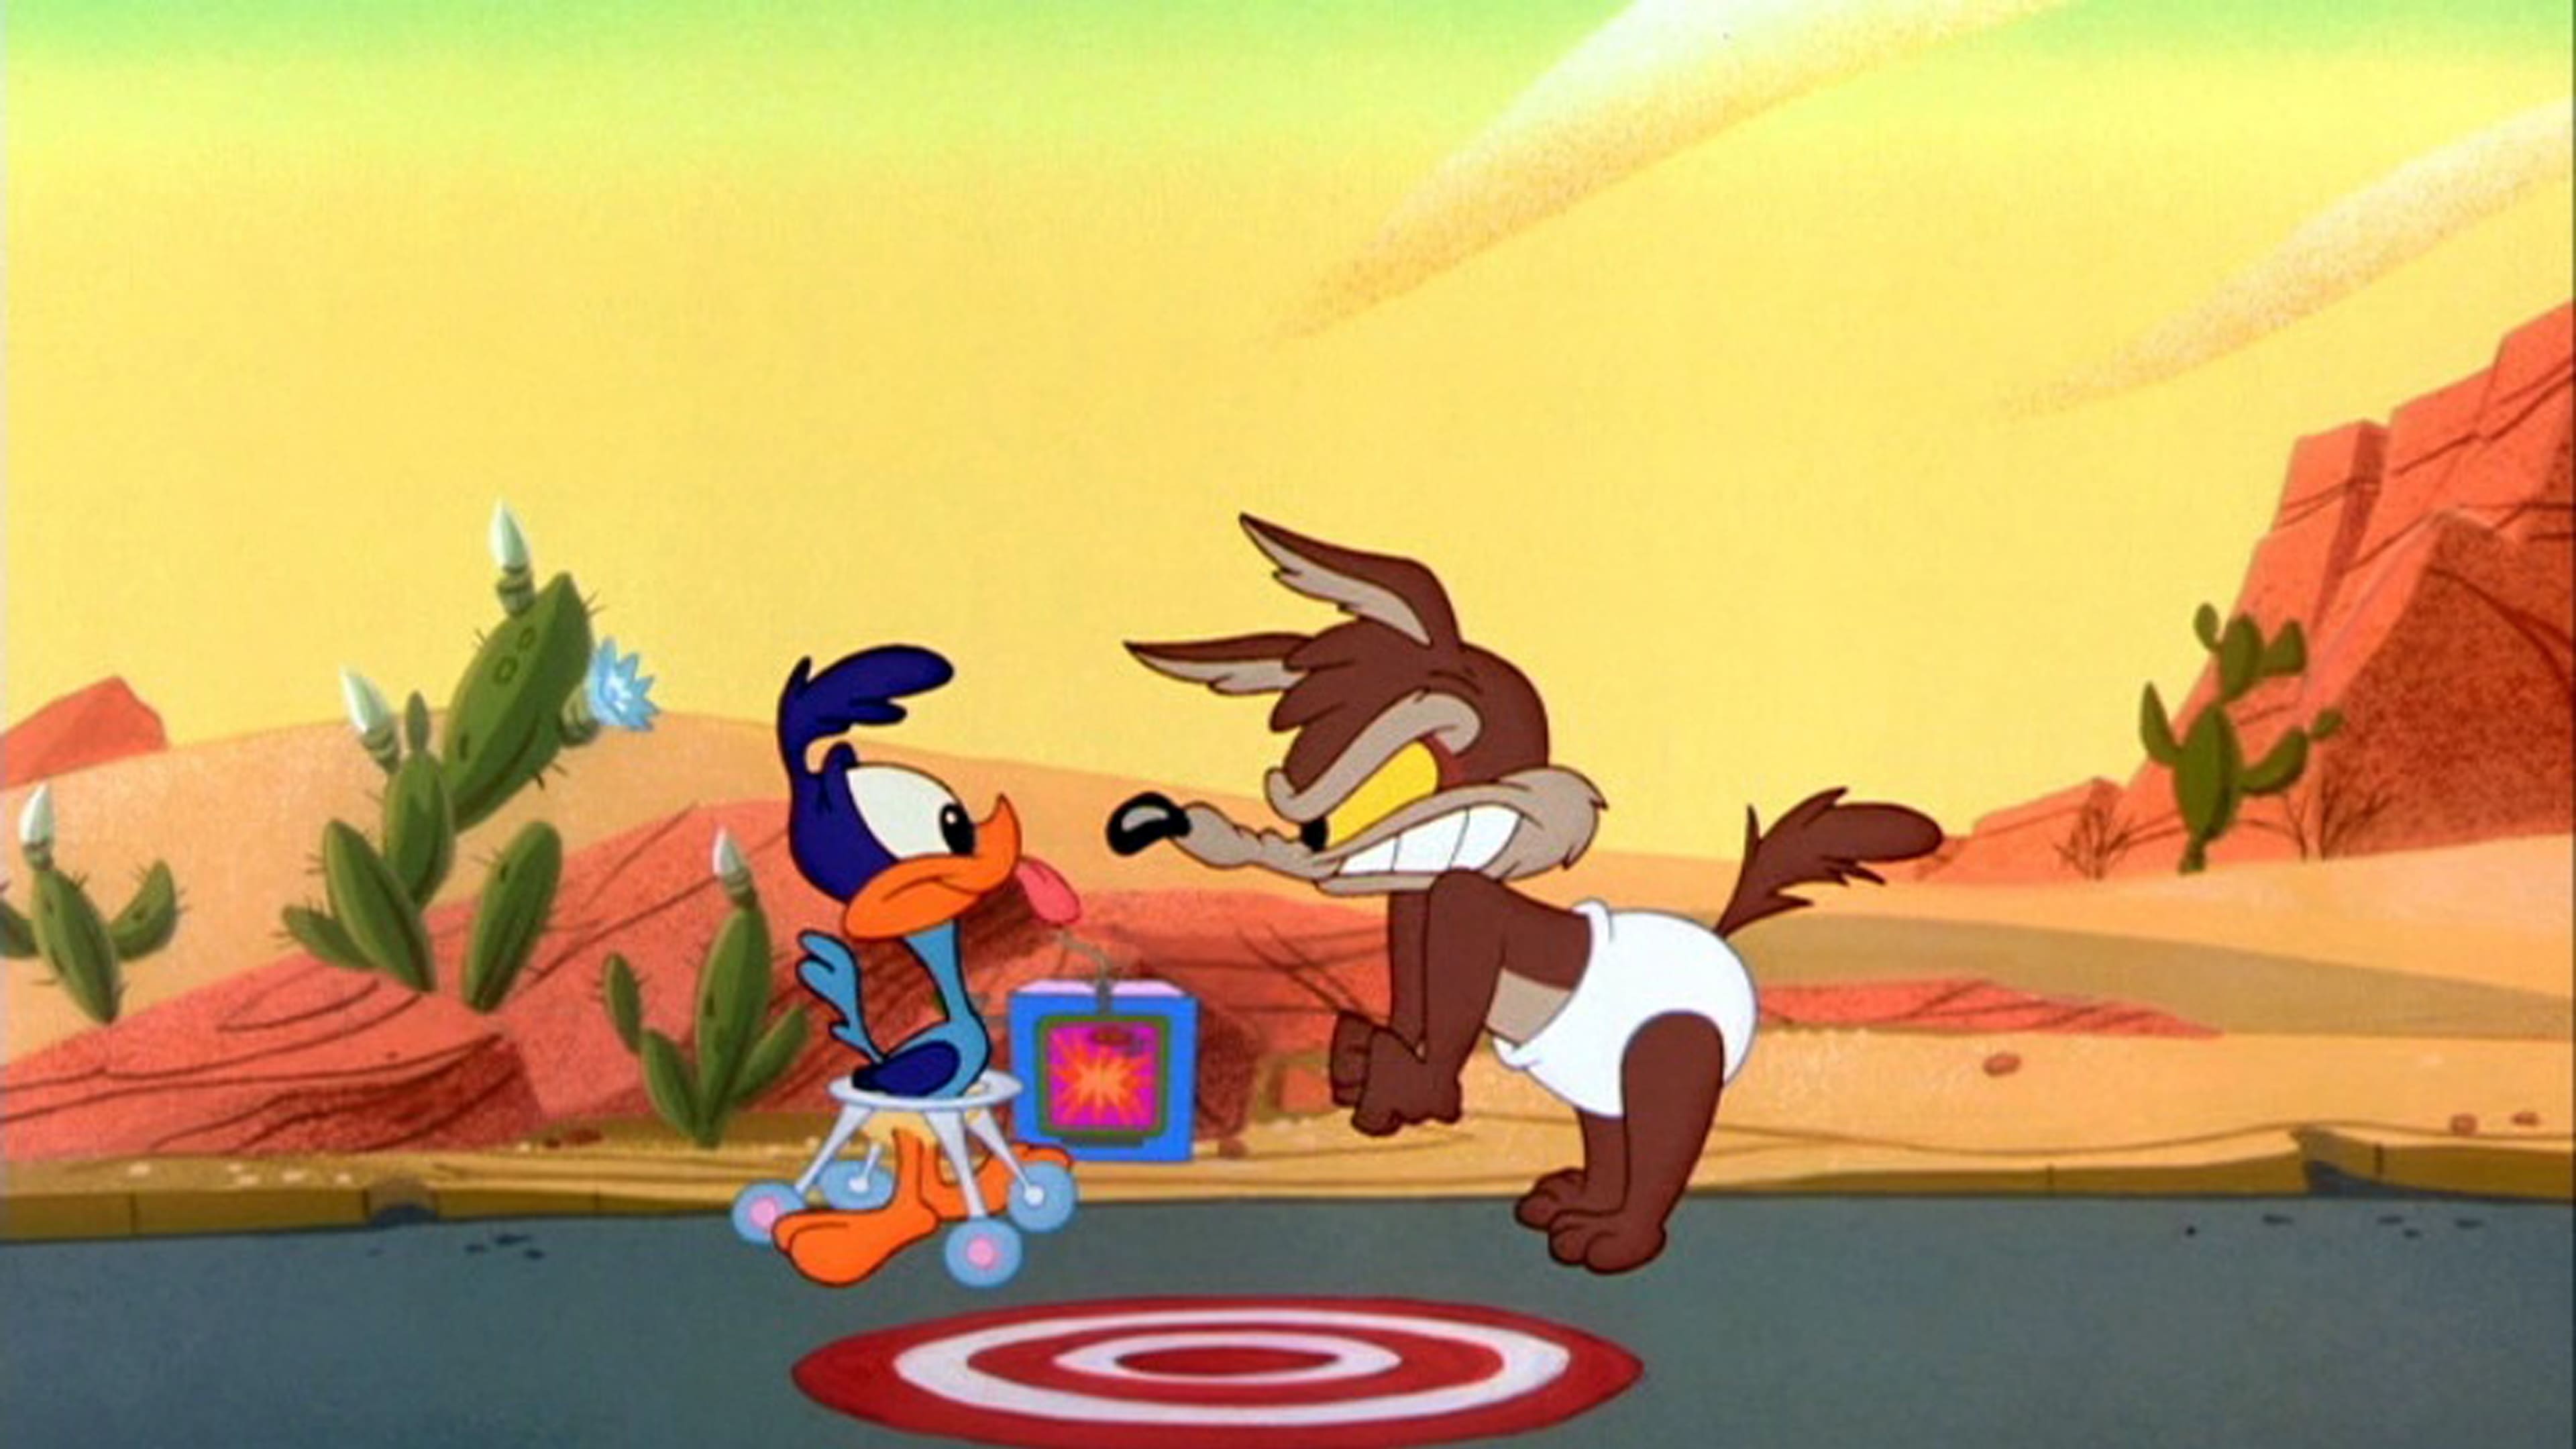 Looney Tunes Super Stars Road Runner & Wile E. Coyote: Supergenius Hijinks (2011)